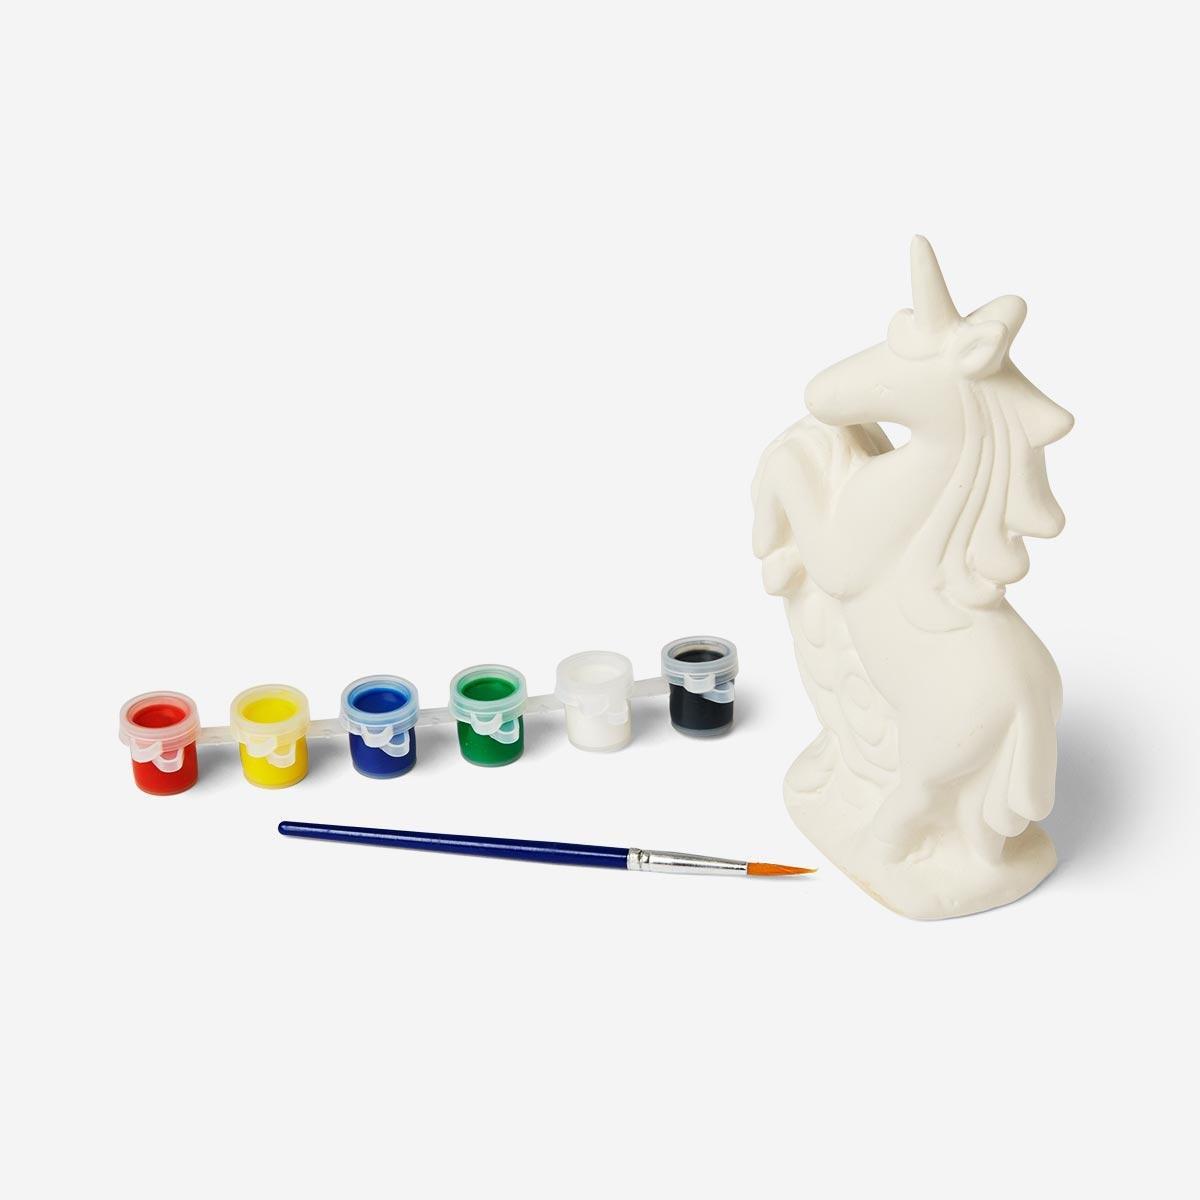 Unicorn paint-your-own figure